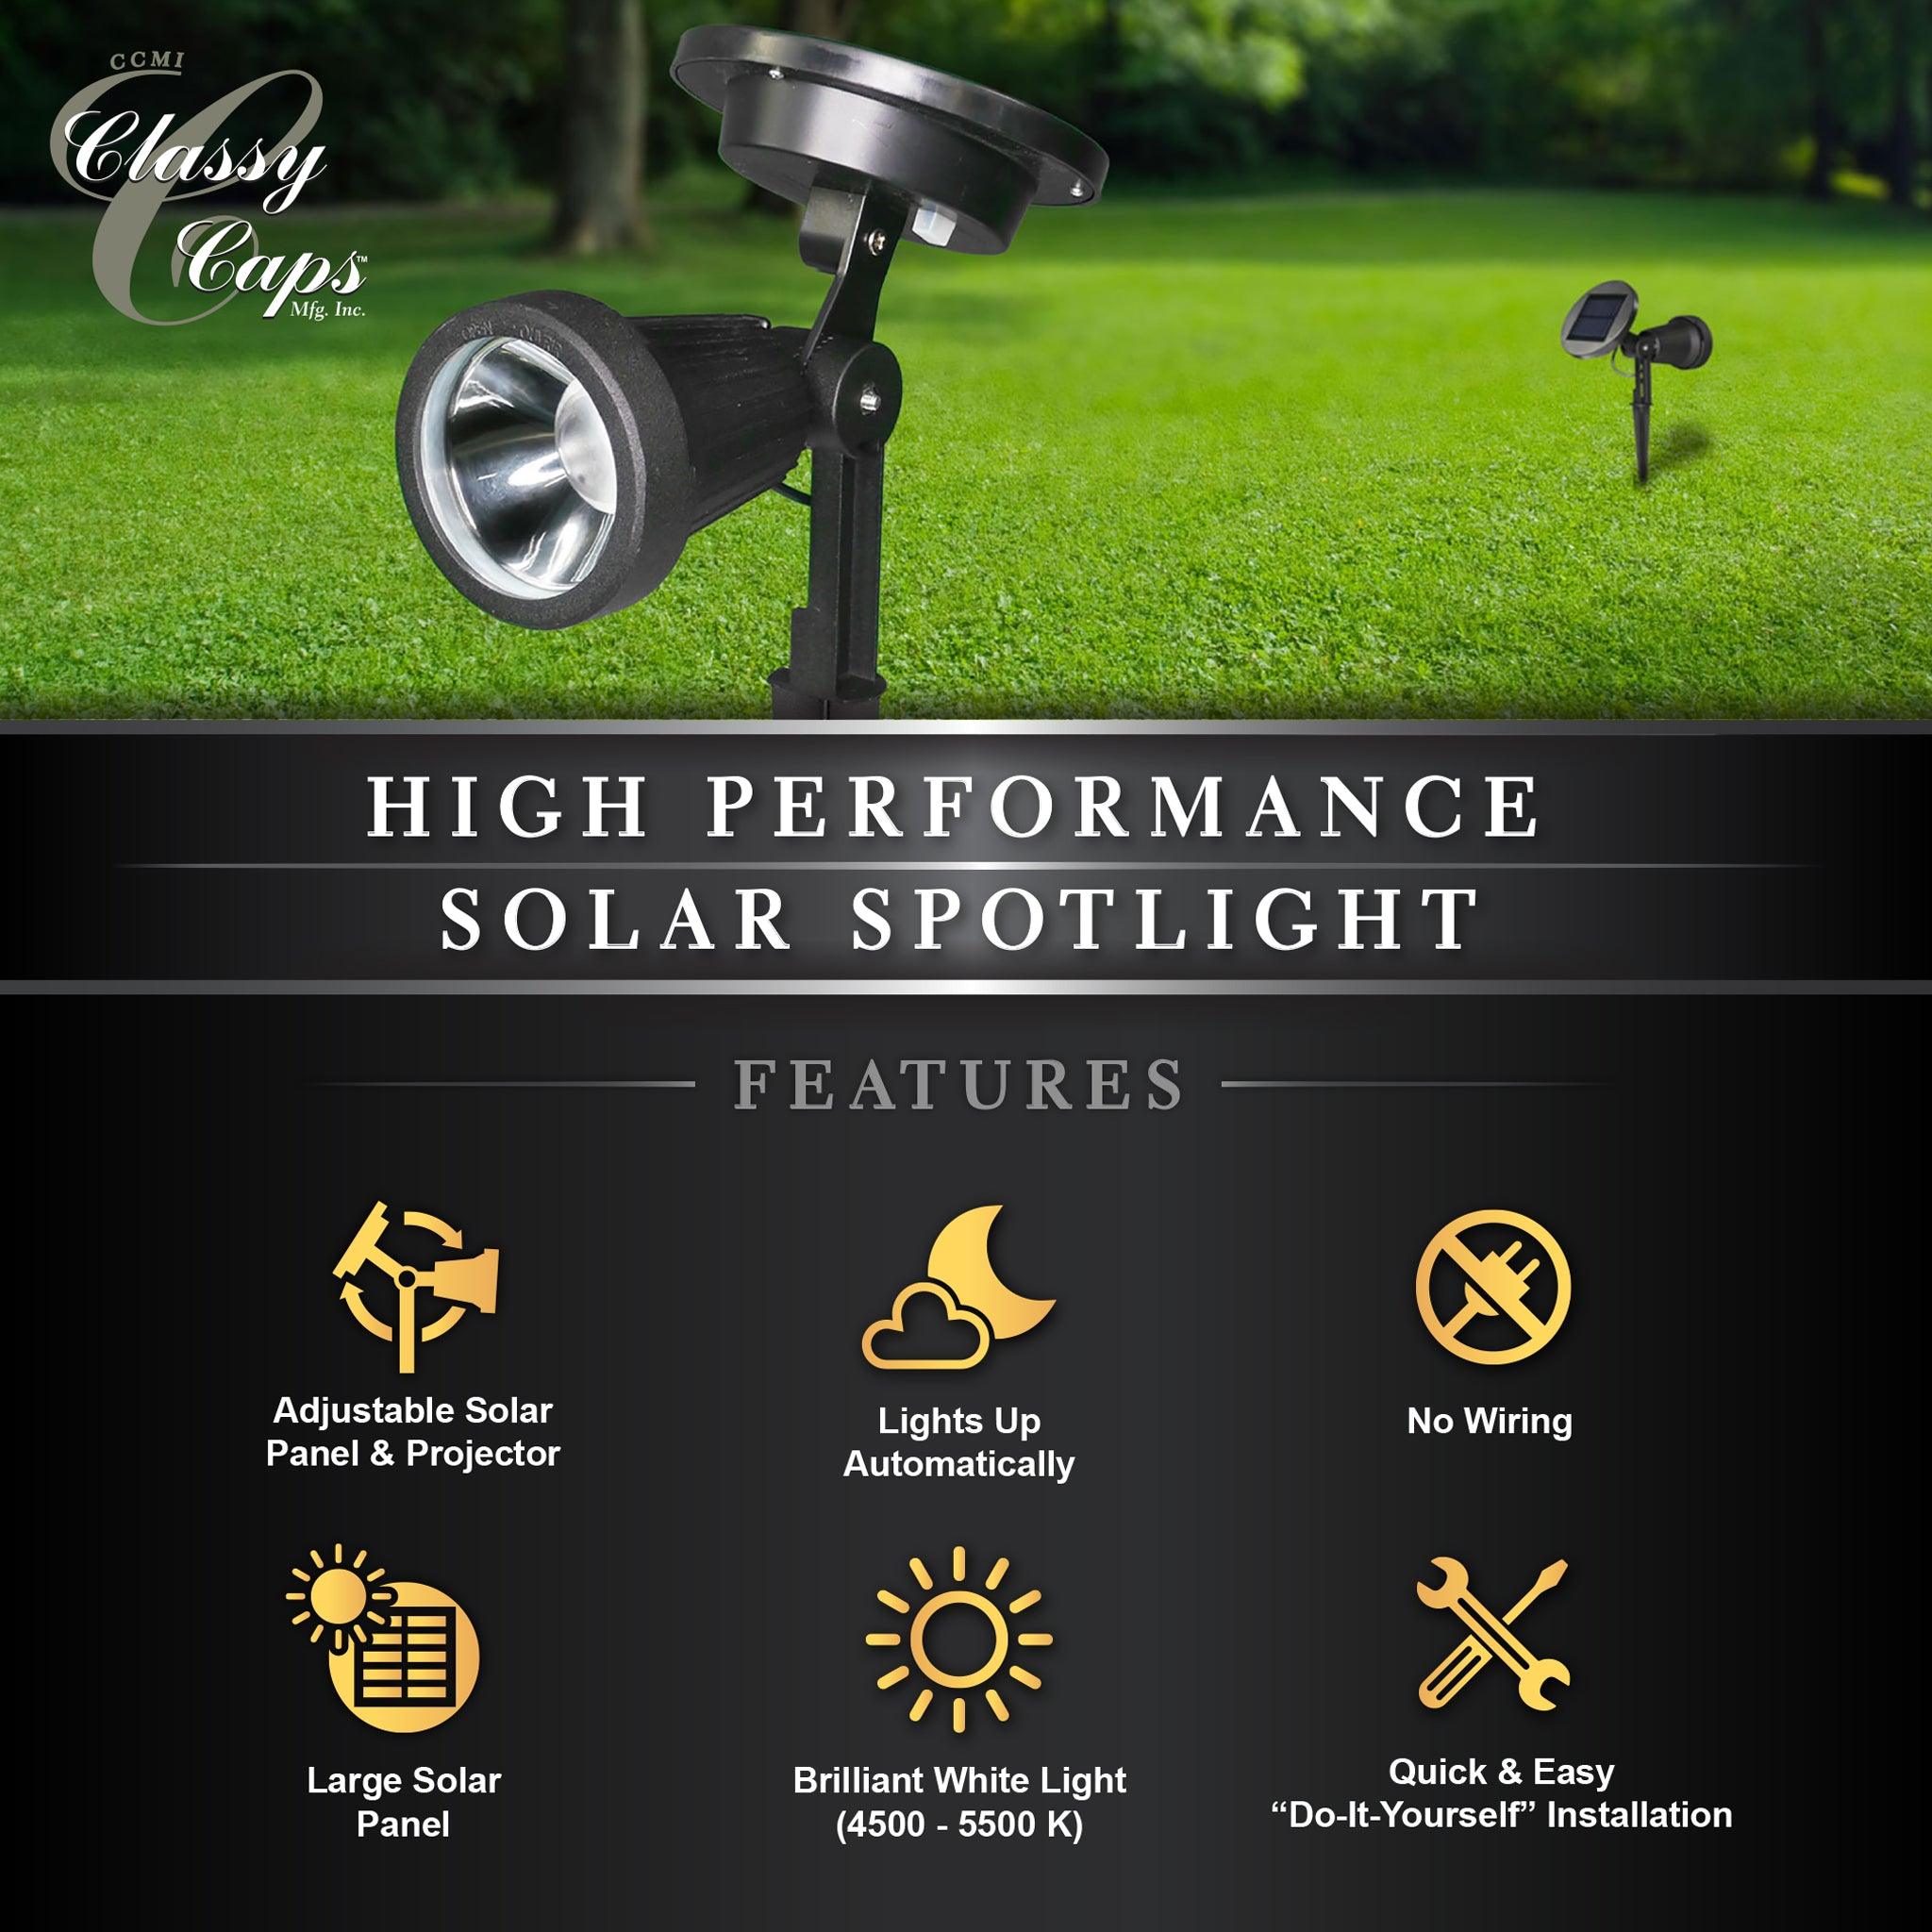 High Performance Solar Spotlight - Classy Caps Mfg. Inc.